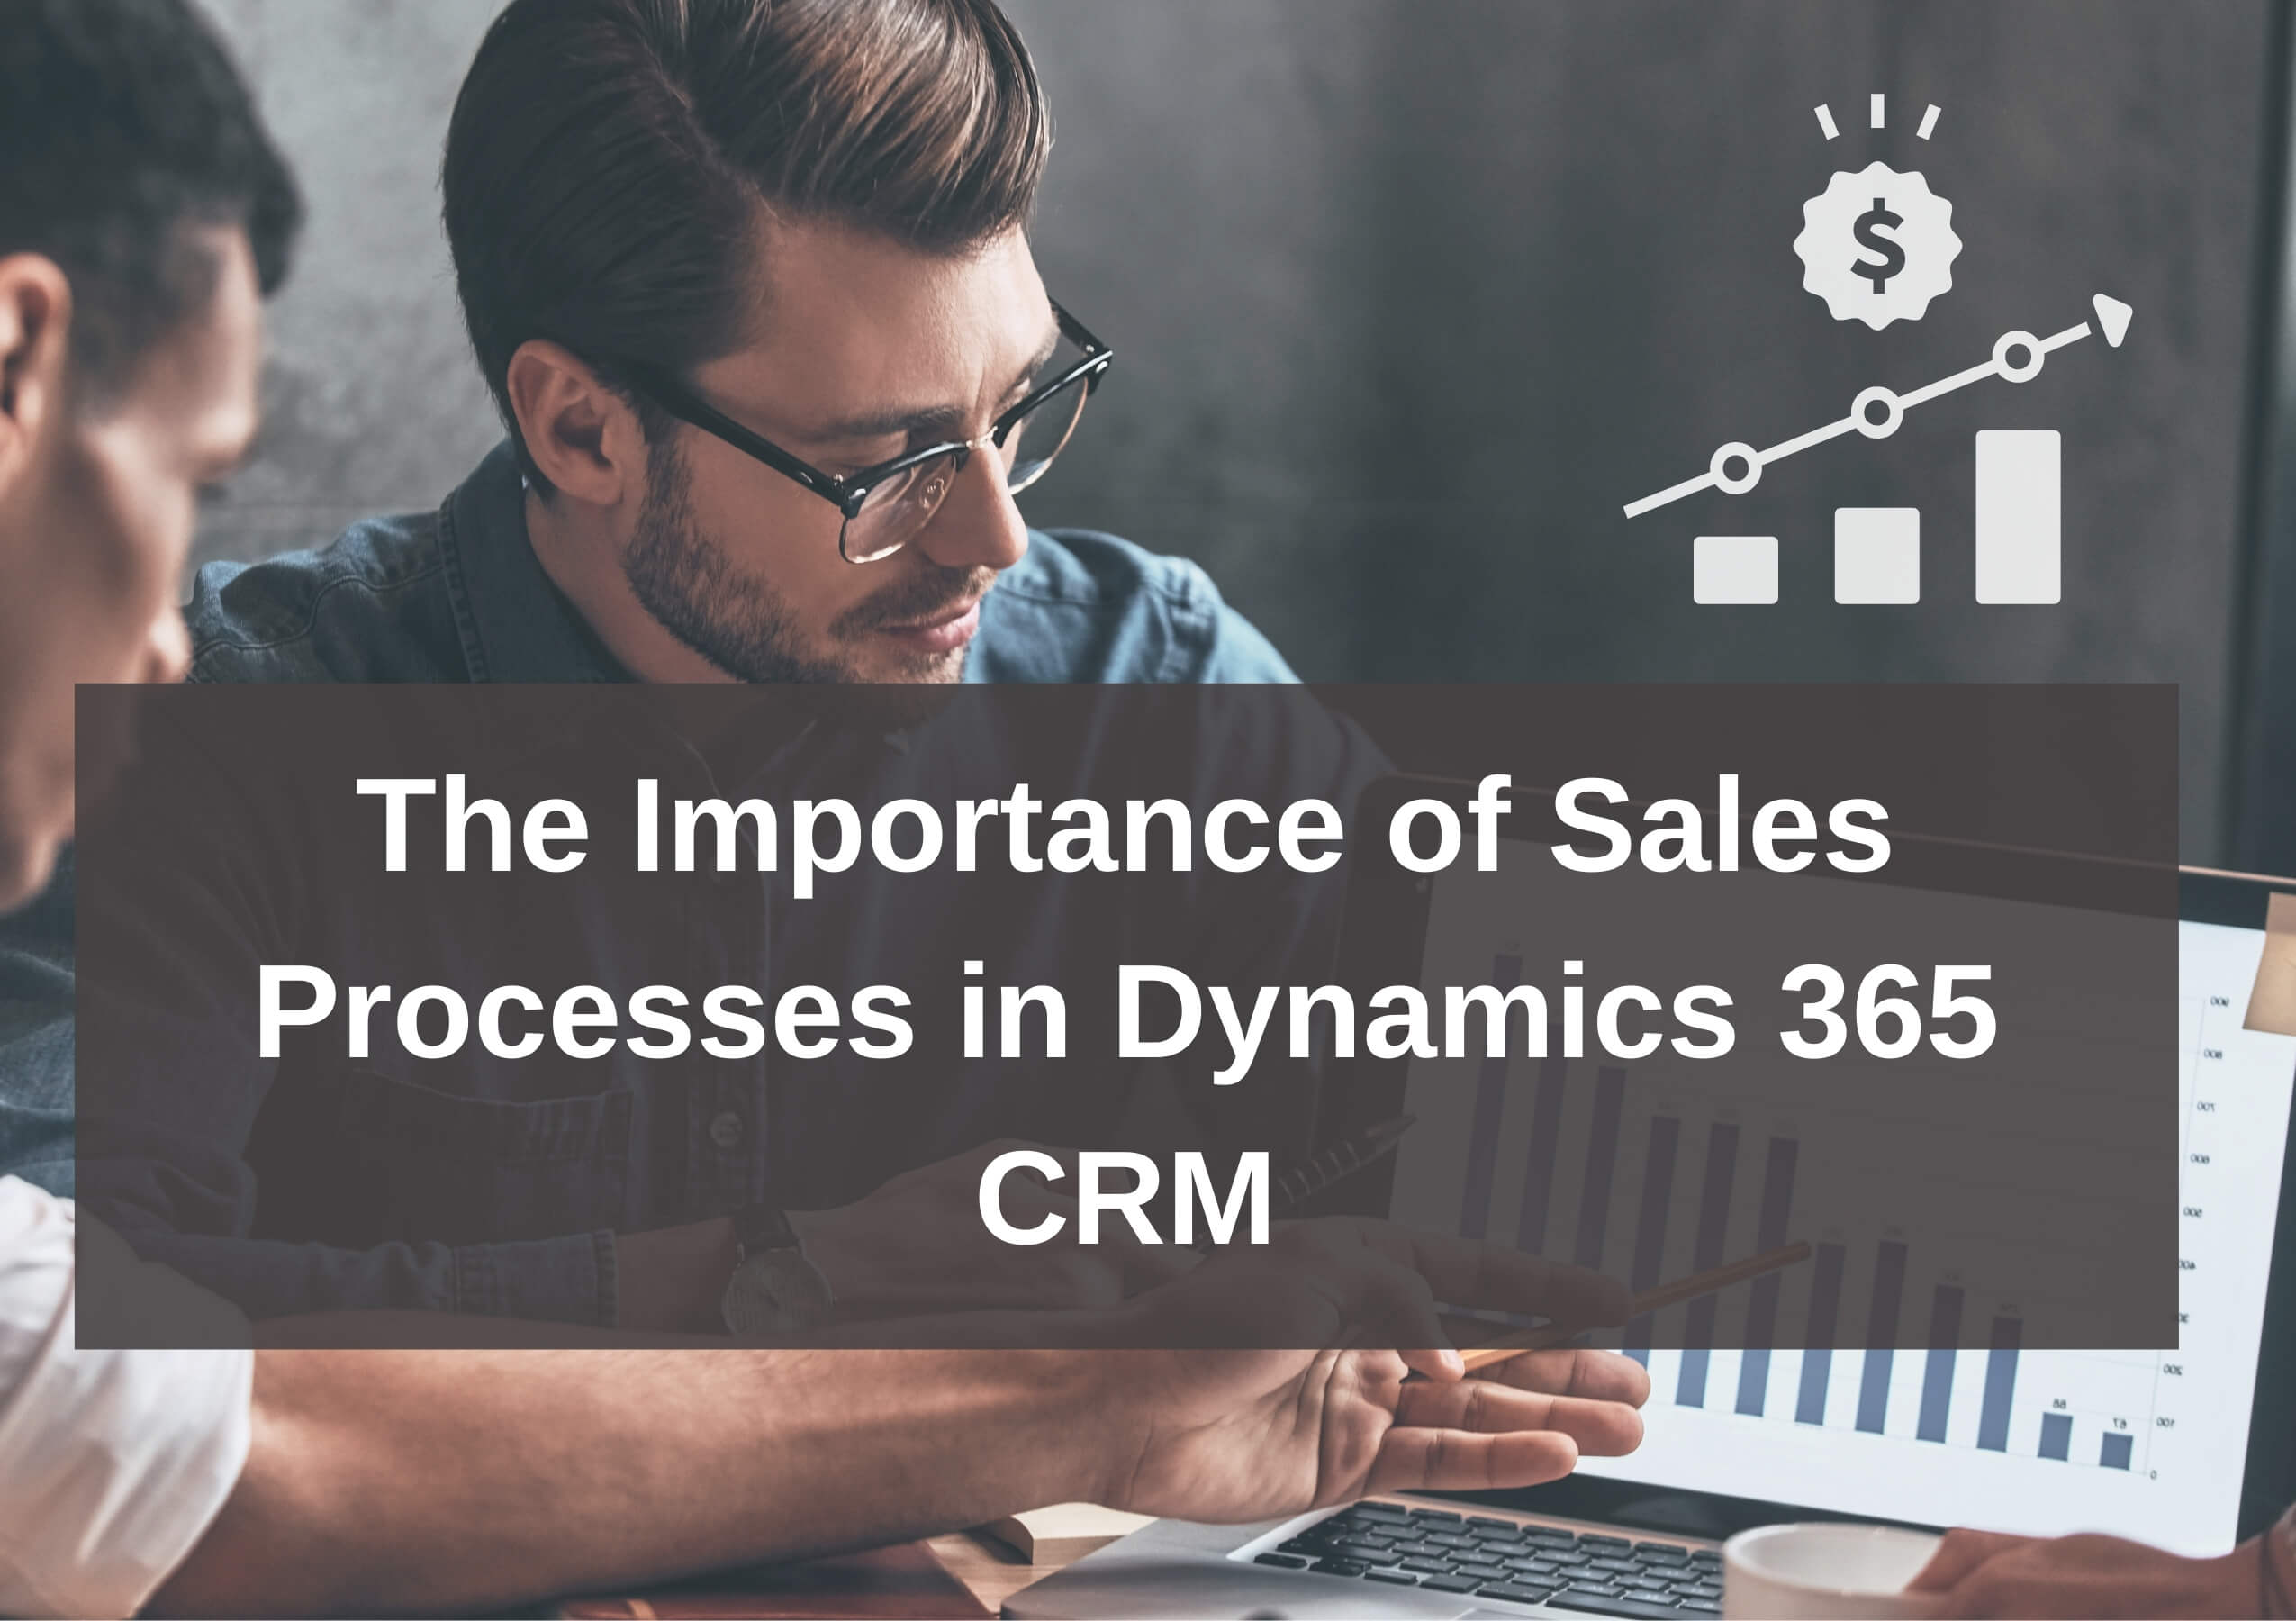 Dynamics 365 CRM: Importance of Sales Process